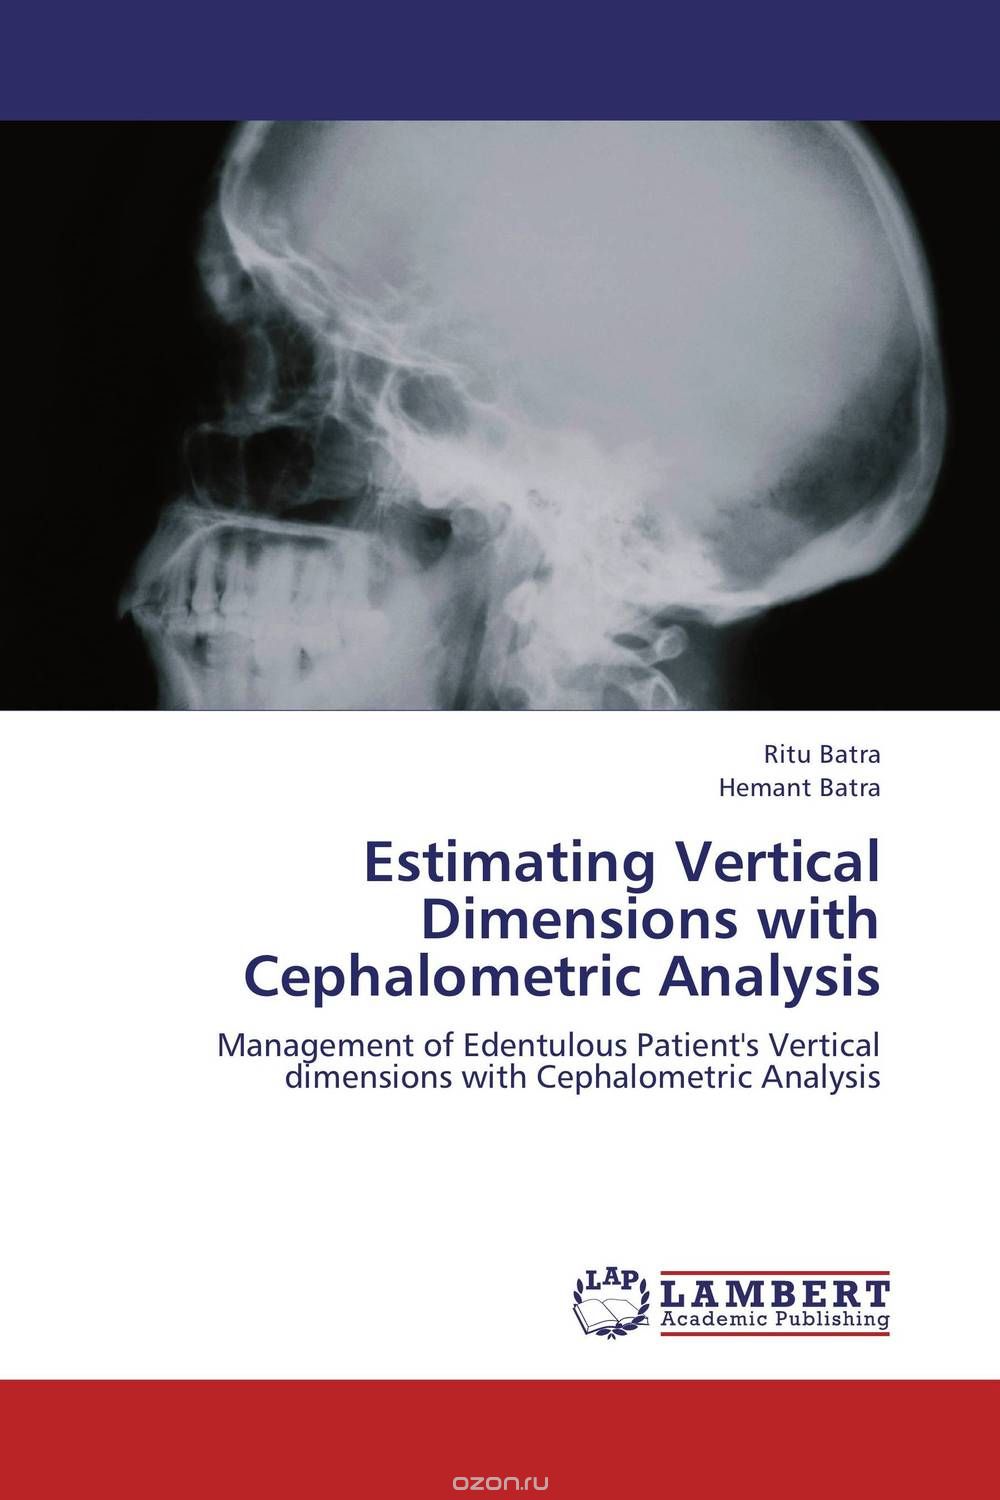 Скачать книгу "Estimating Vertical Dimensions  with Cephalometric Analysis"